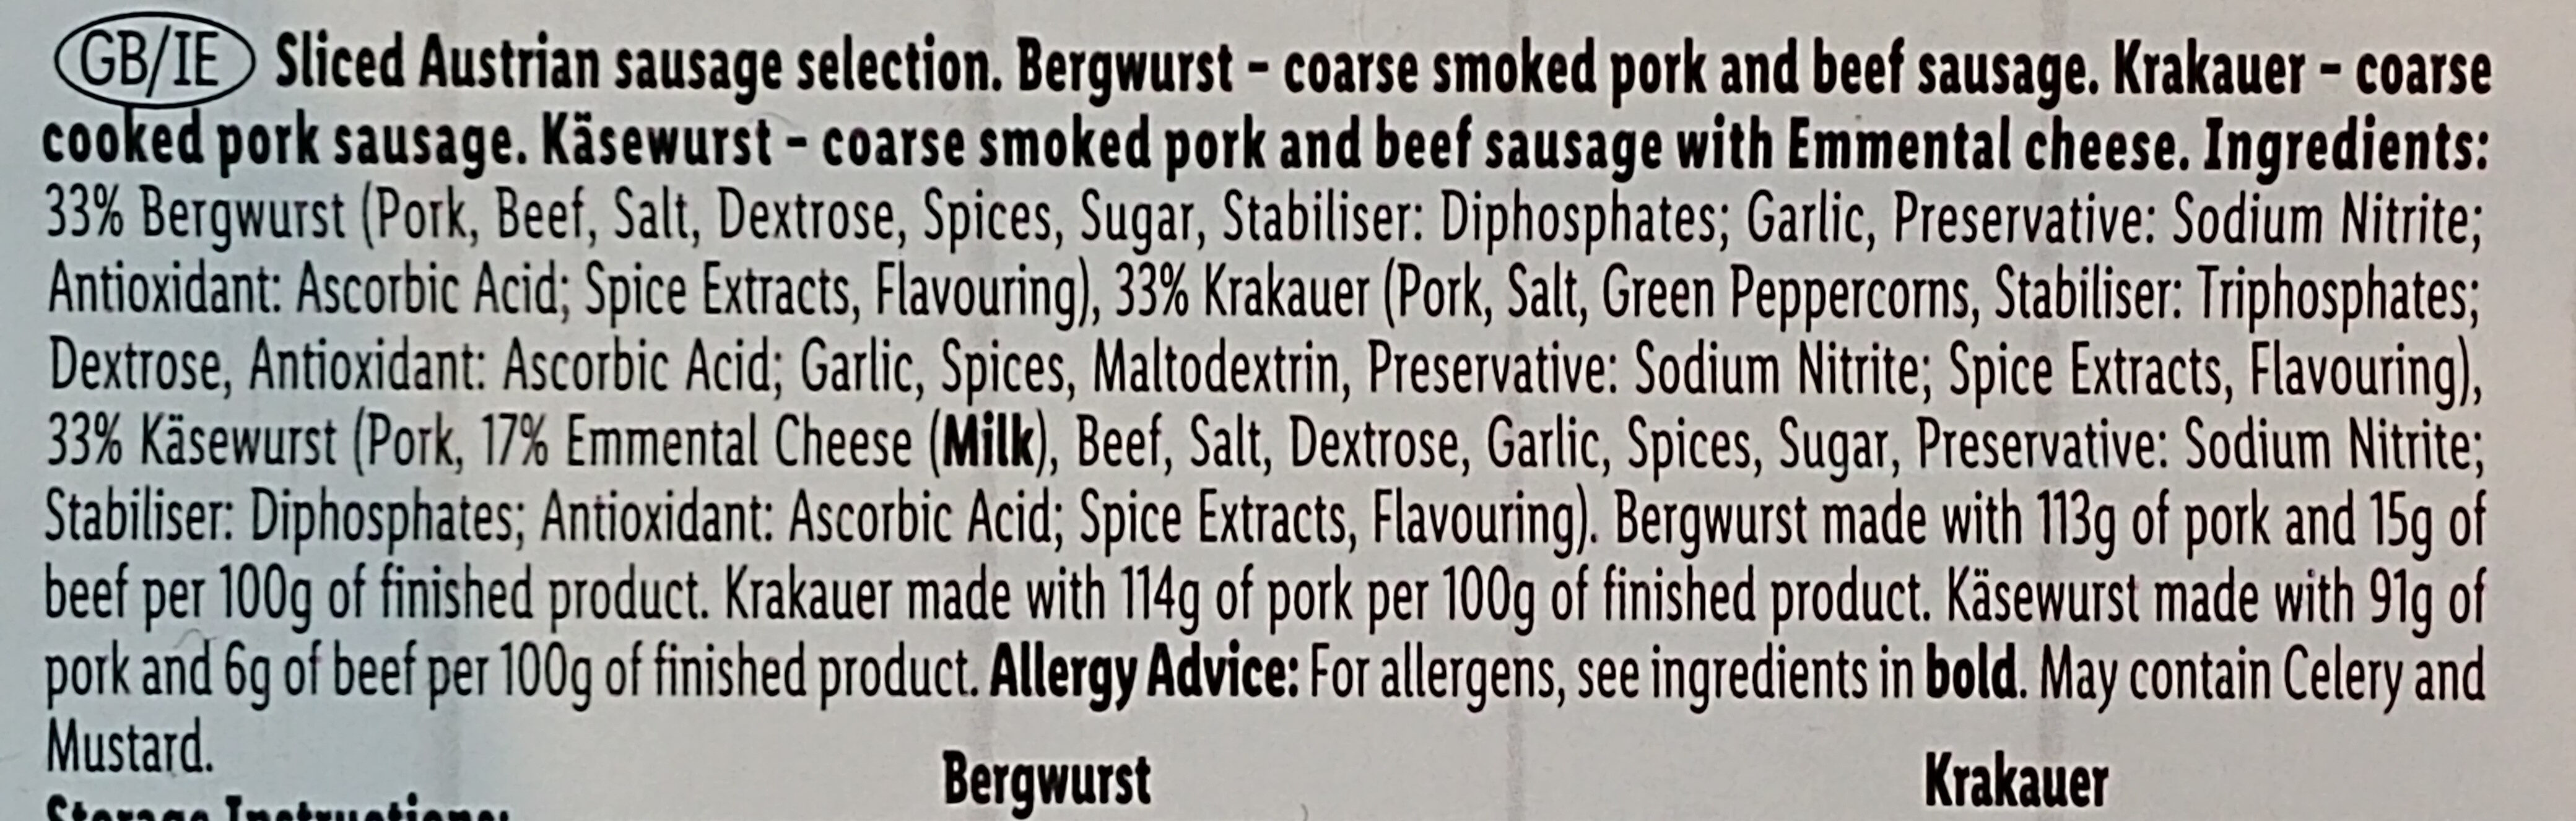 Austrian Sliced Sausage Selection - Ingredients - en